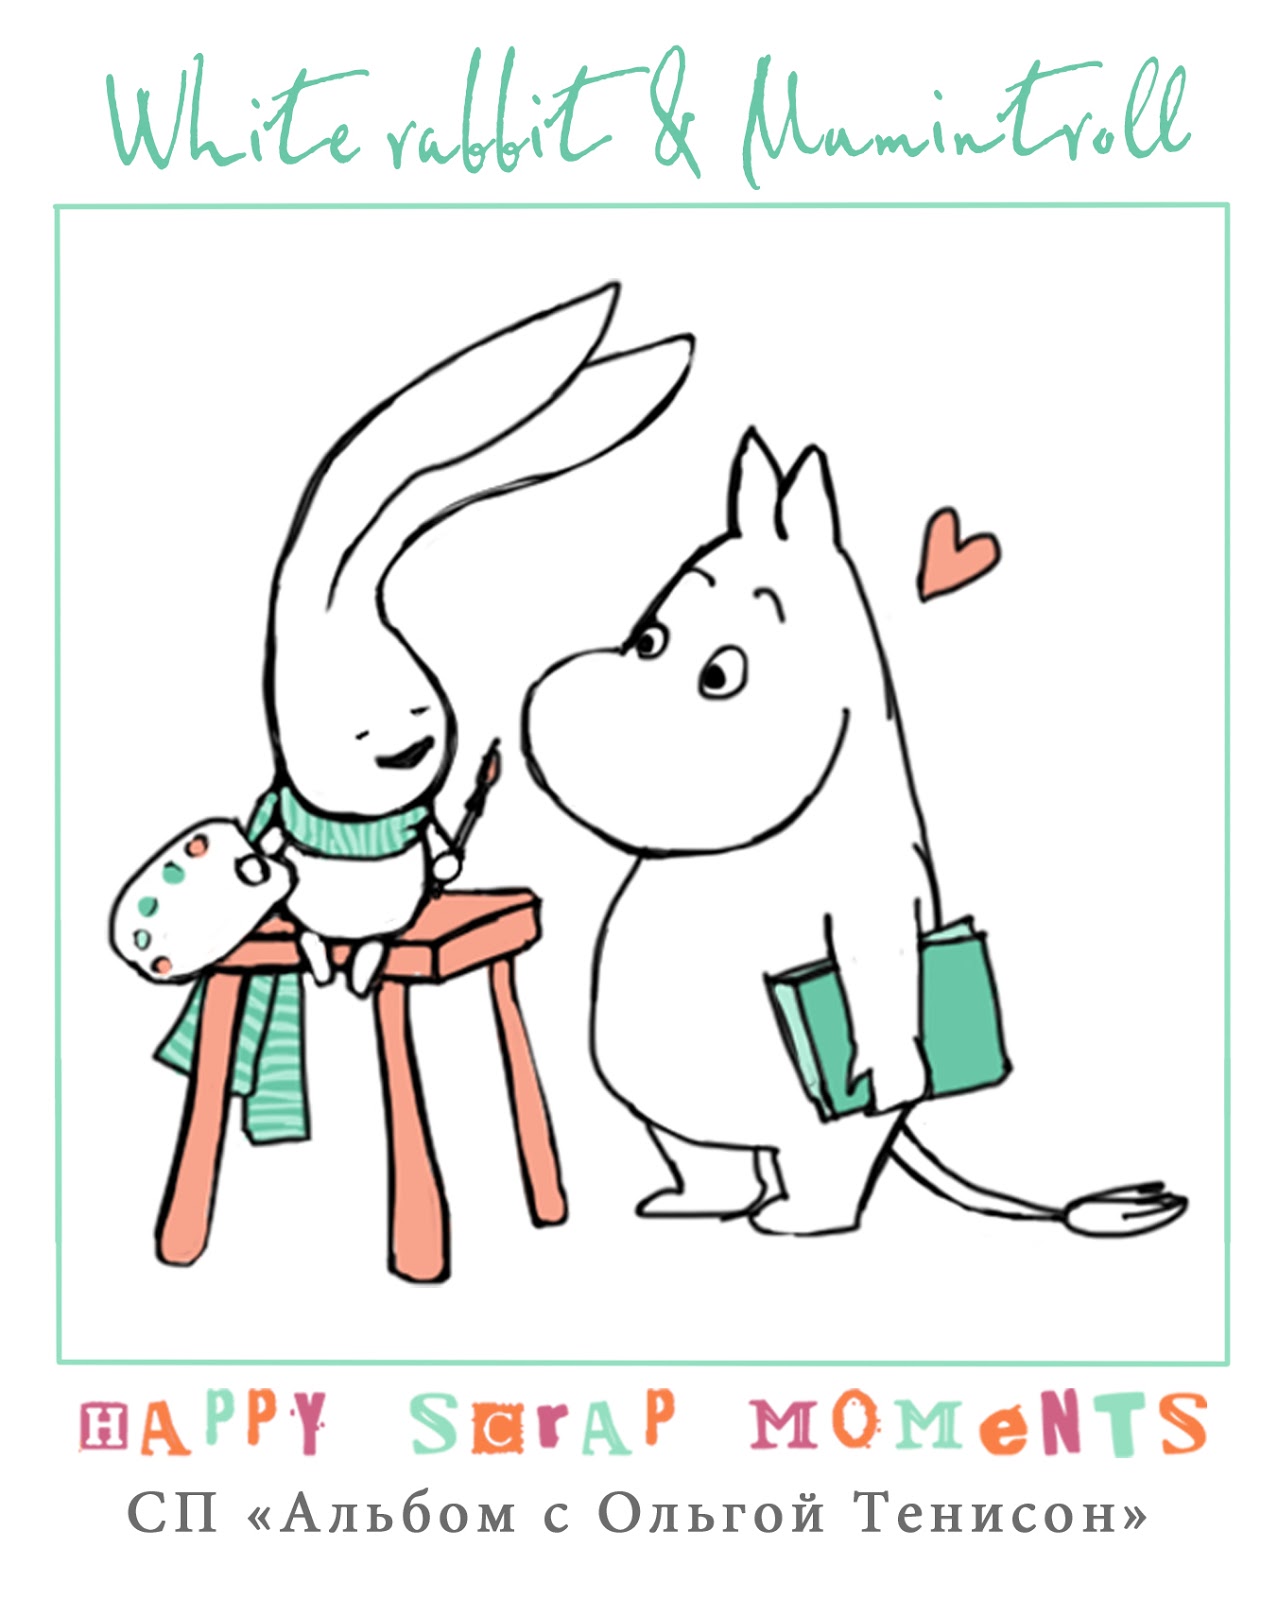 http://happyscrapmoments.blogspot.ru/2014/03/white-rabbit-2.html